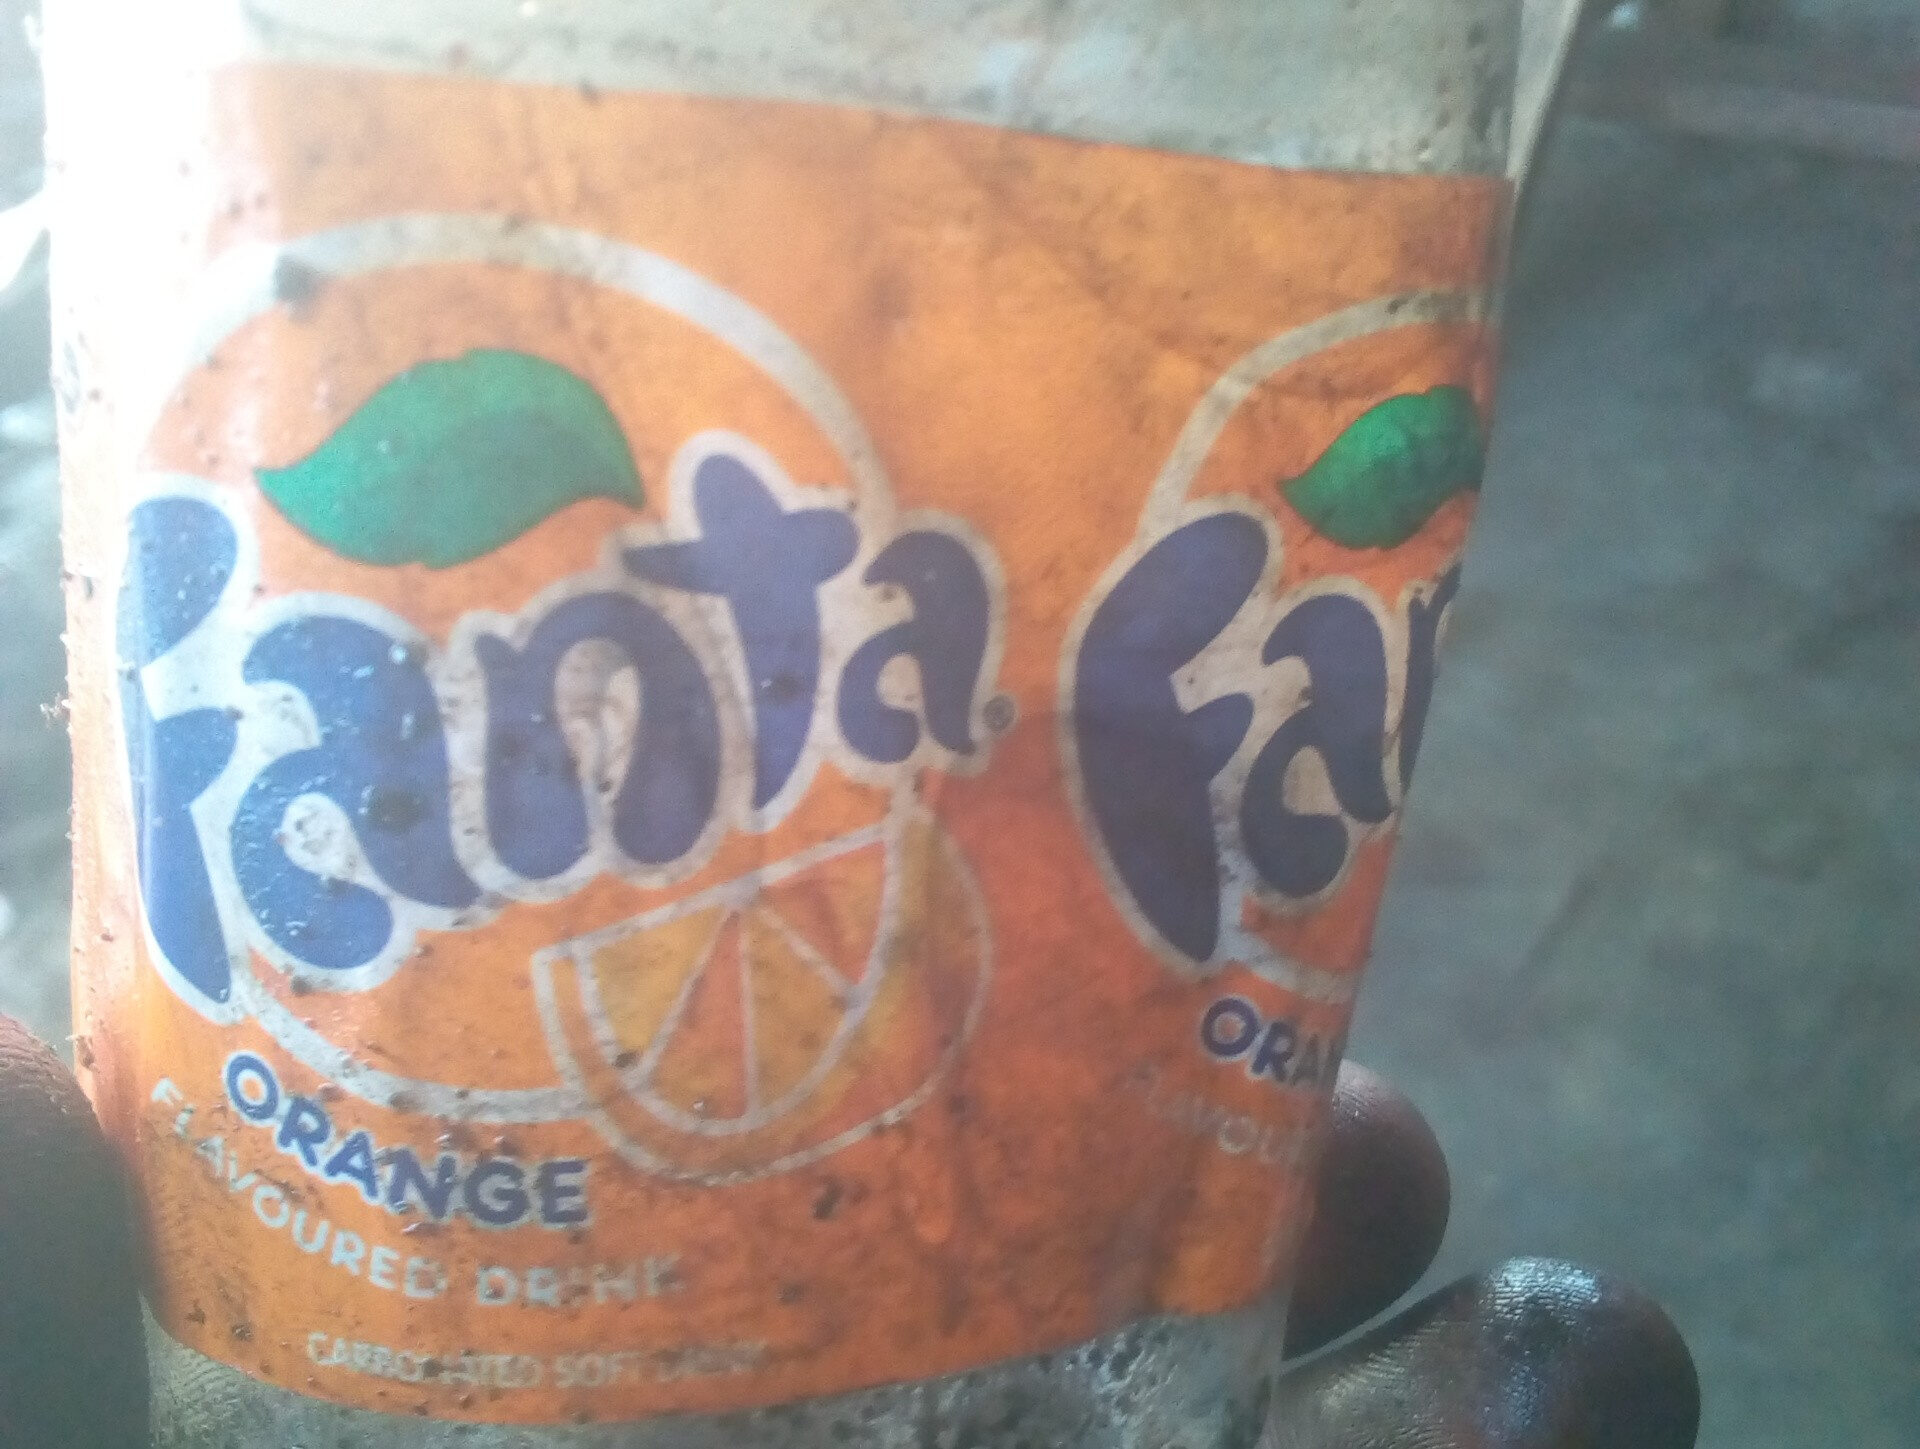 Fanta orange boisson gazesues - Product - en